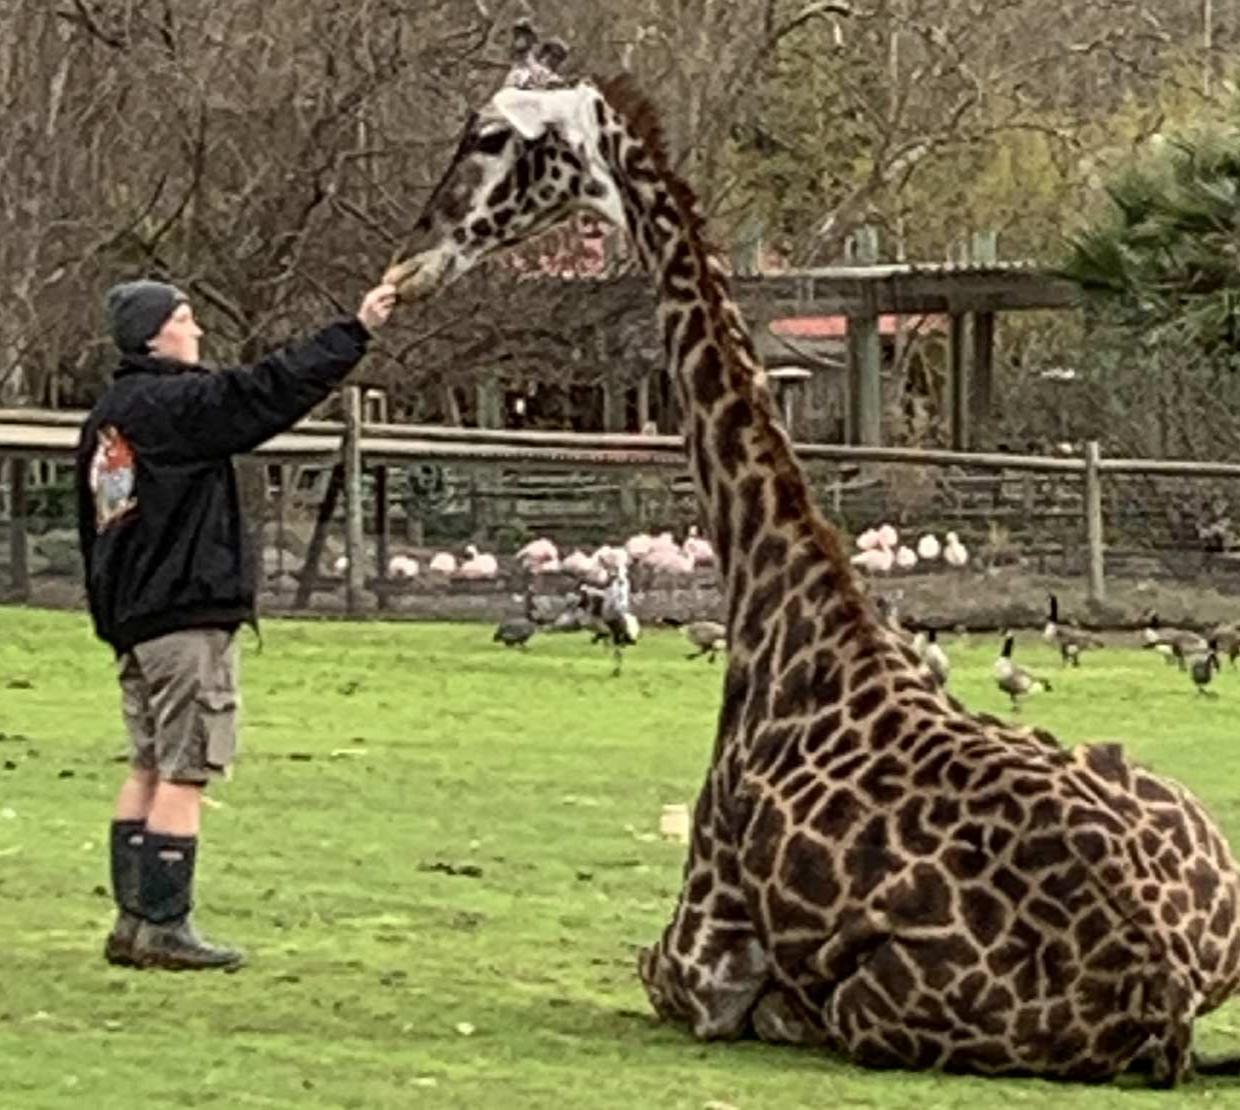 Molly Cordell cares for a giraffe at Safari West in Santa Rosa, CA